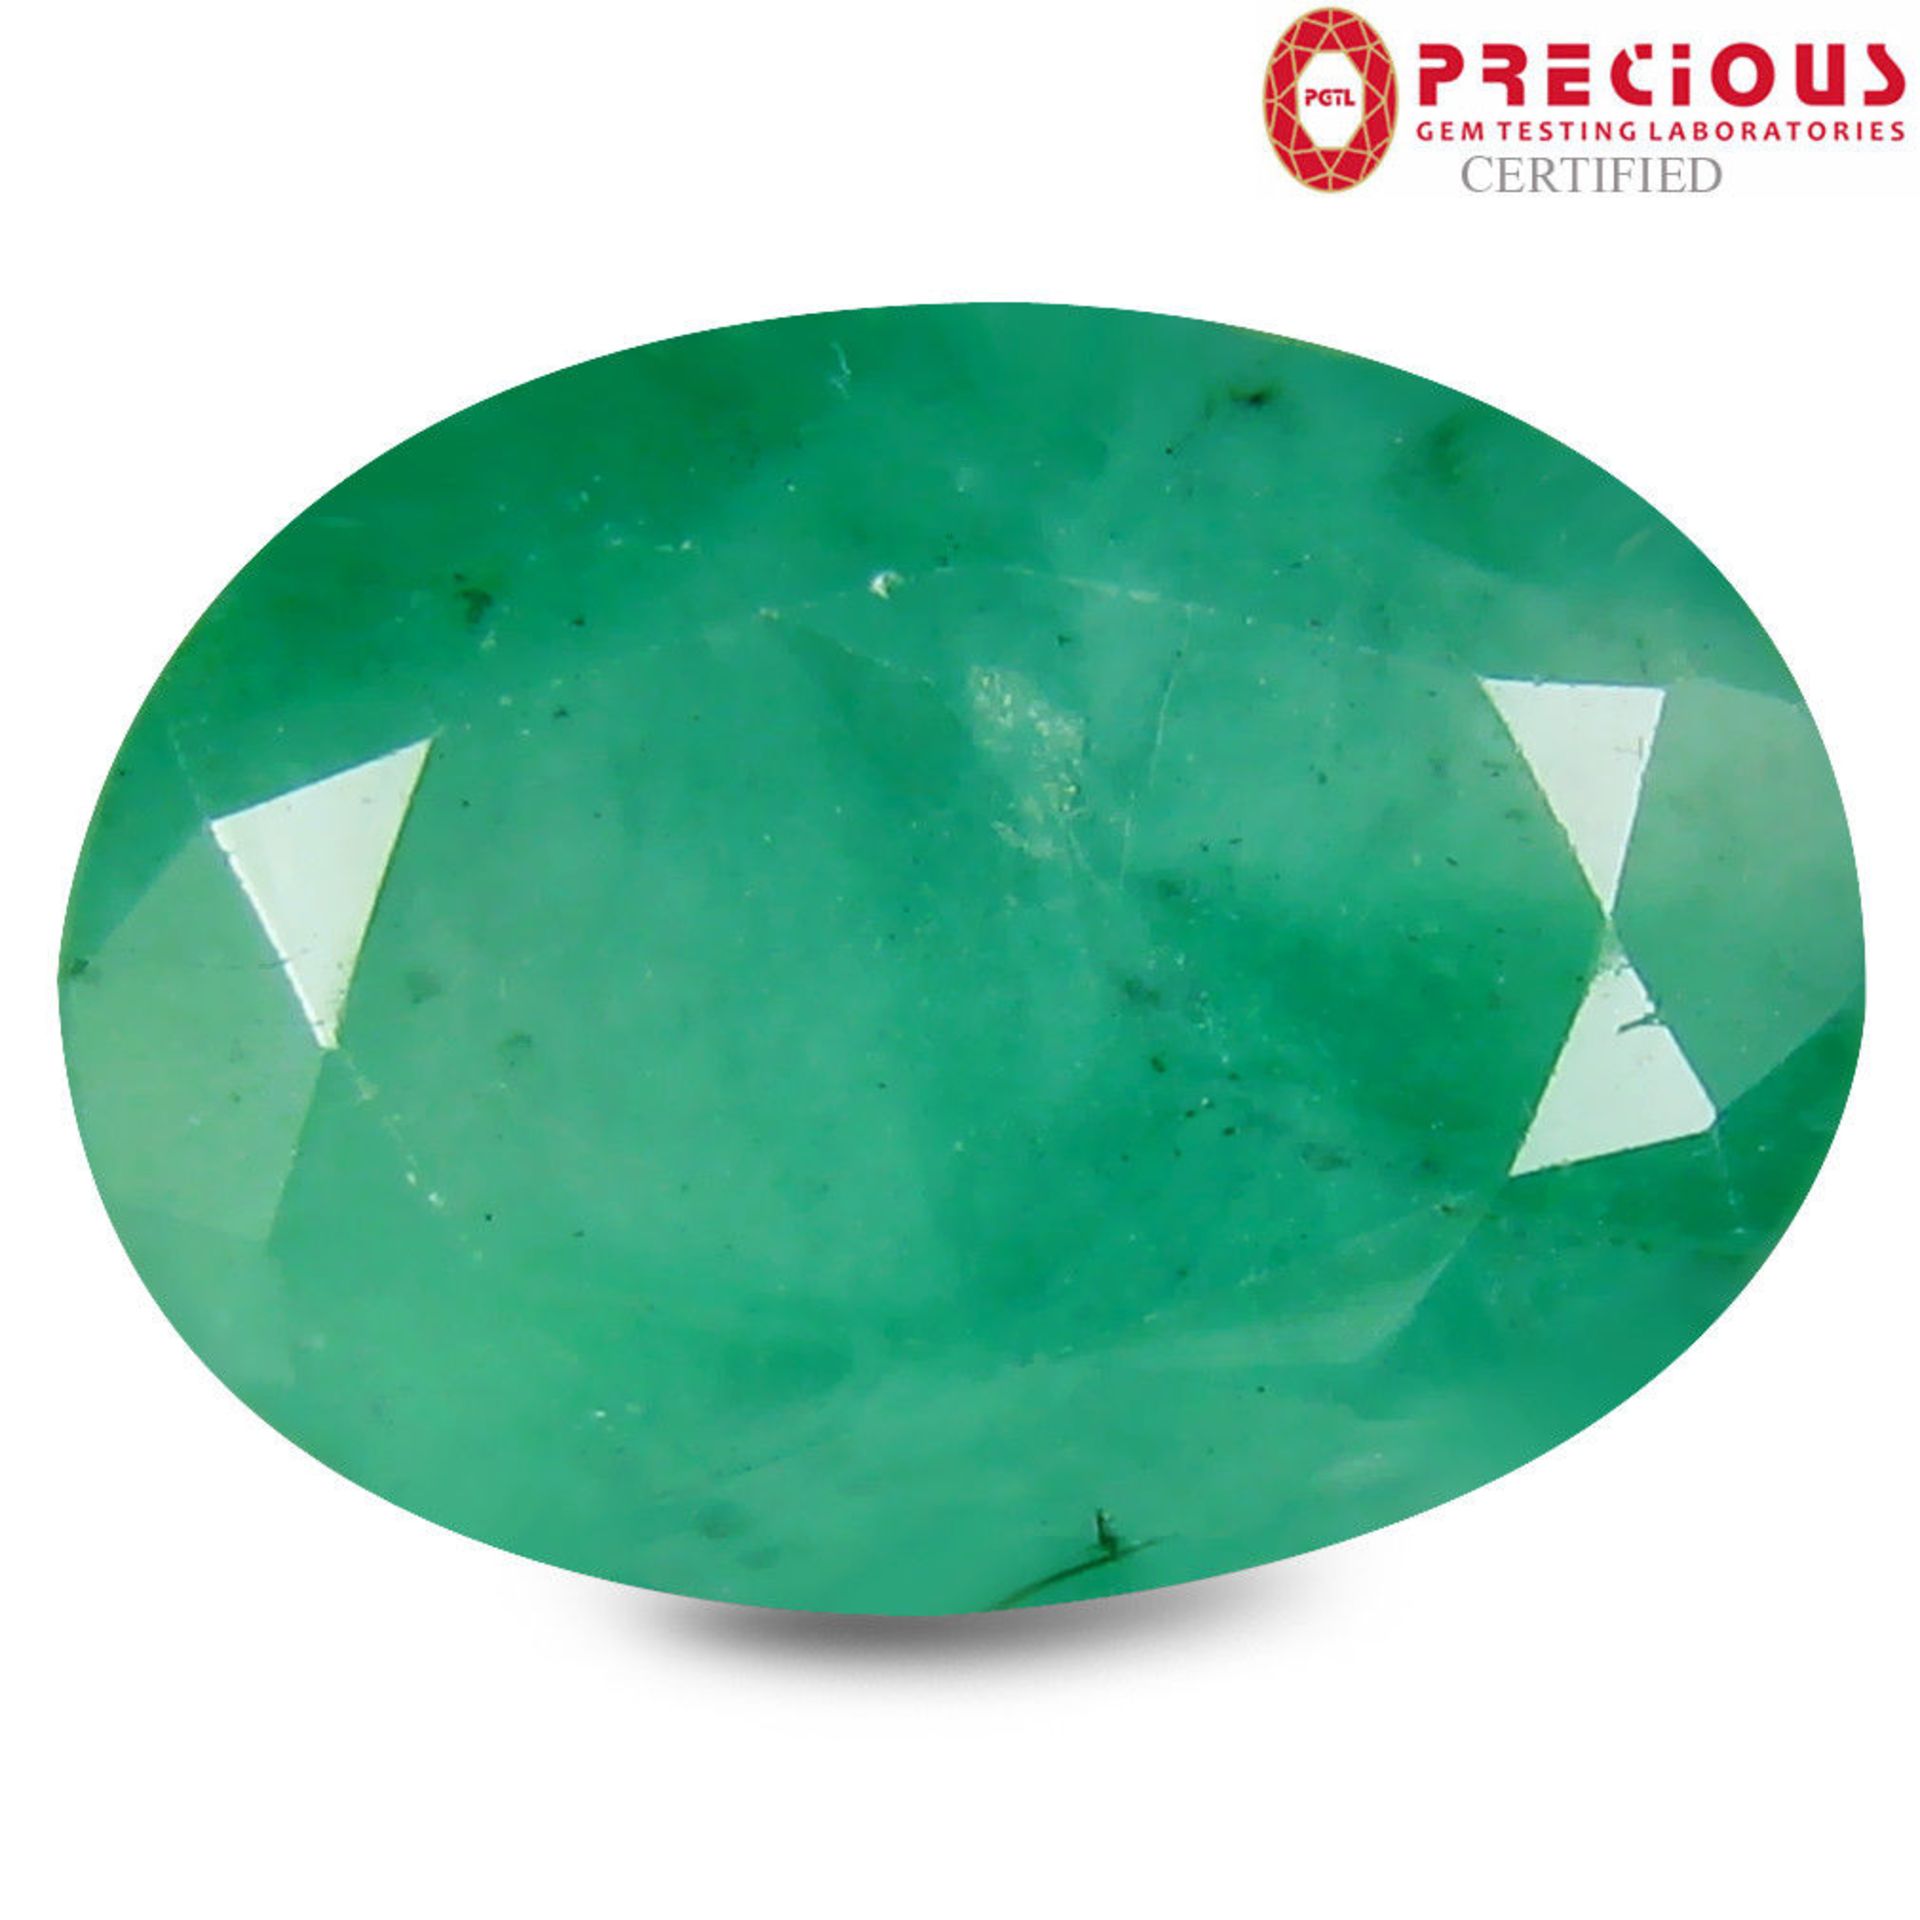 6.06 Carat PGTL & AGI Certified Oval Cut (15 x 11mm) Colombian Emerald Gemstone. A Natural Emerald.